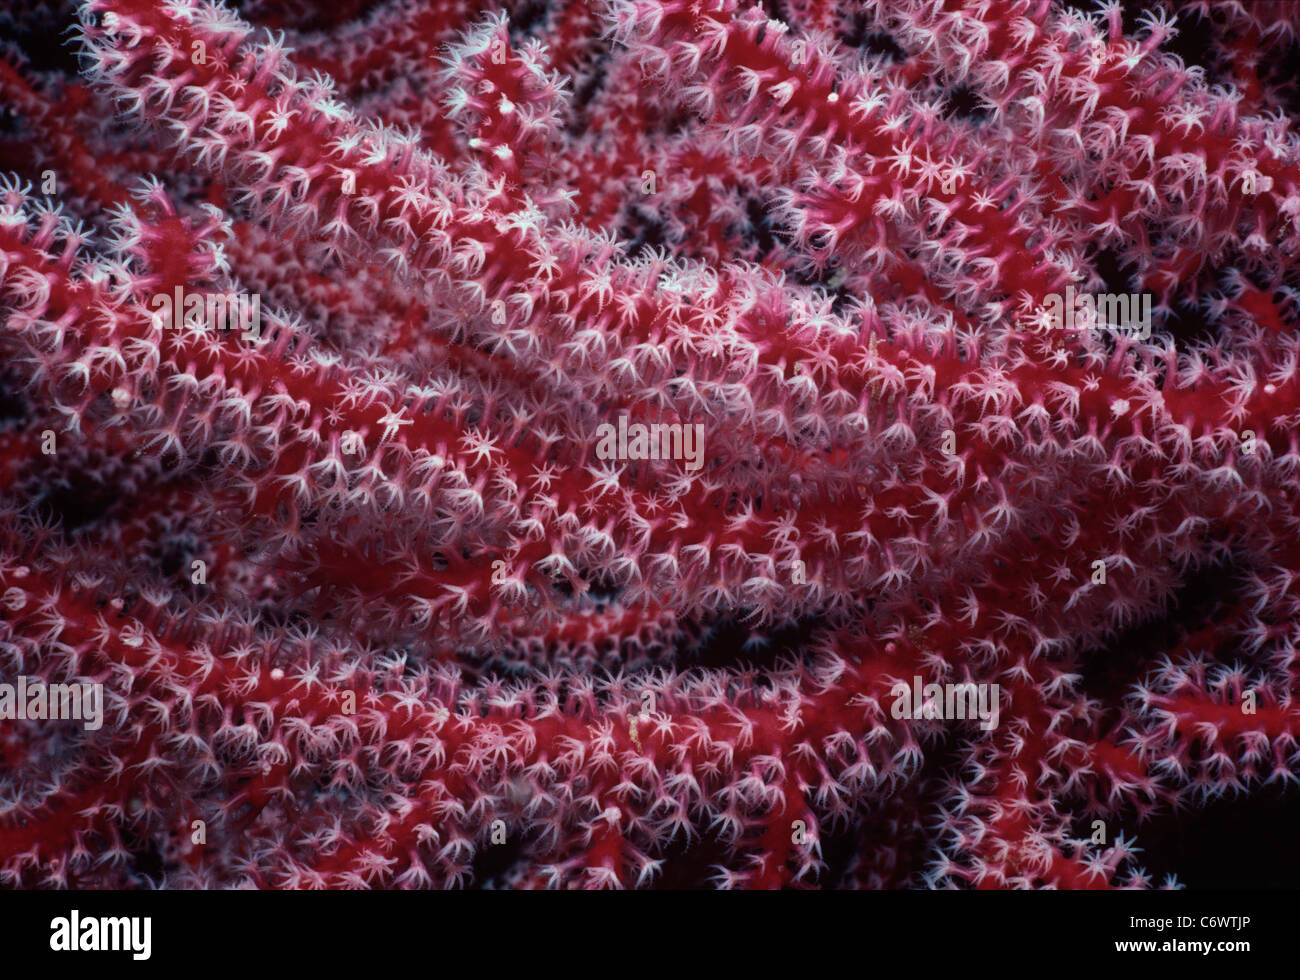 Sea Fan Gorgonia Coral (Subergorgia hicksoni), polyps open and feeding at night, Papua New Guinea - Bismarck Sea Stock Photo